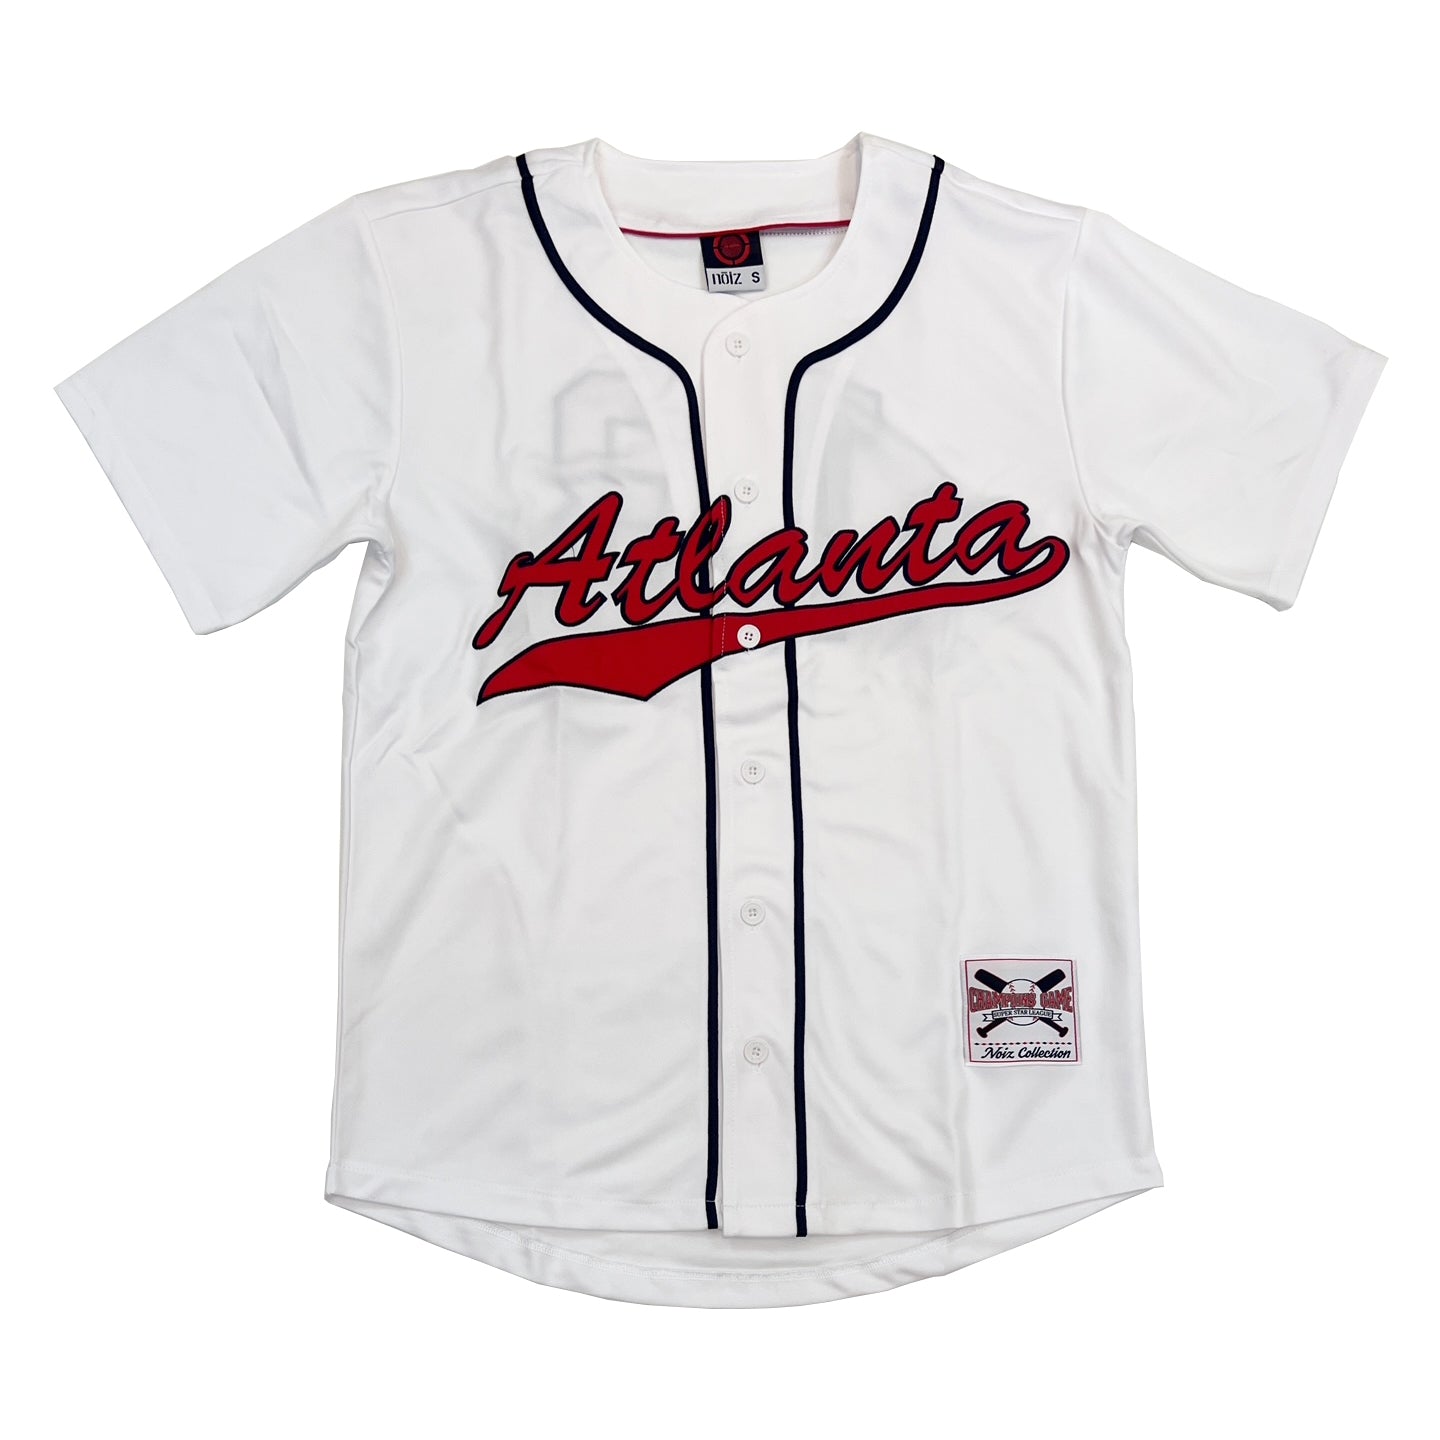 Noiz Atlanta Baseball Jersey (White/Red) S